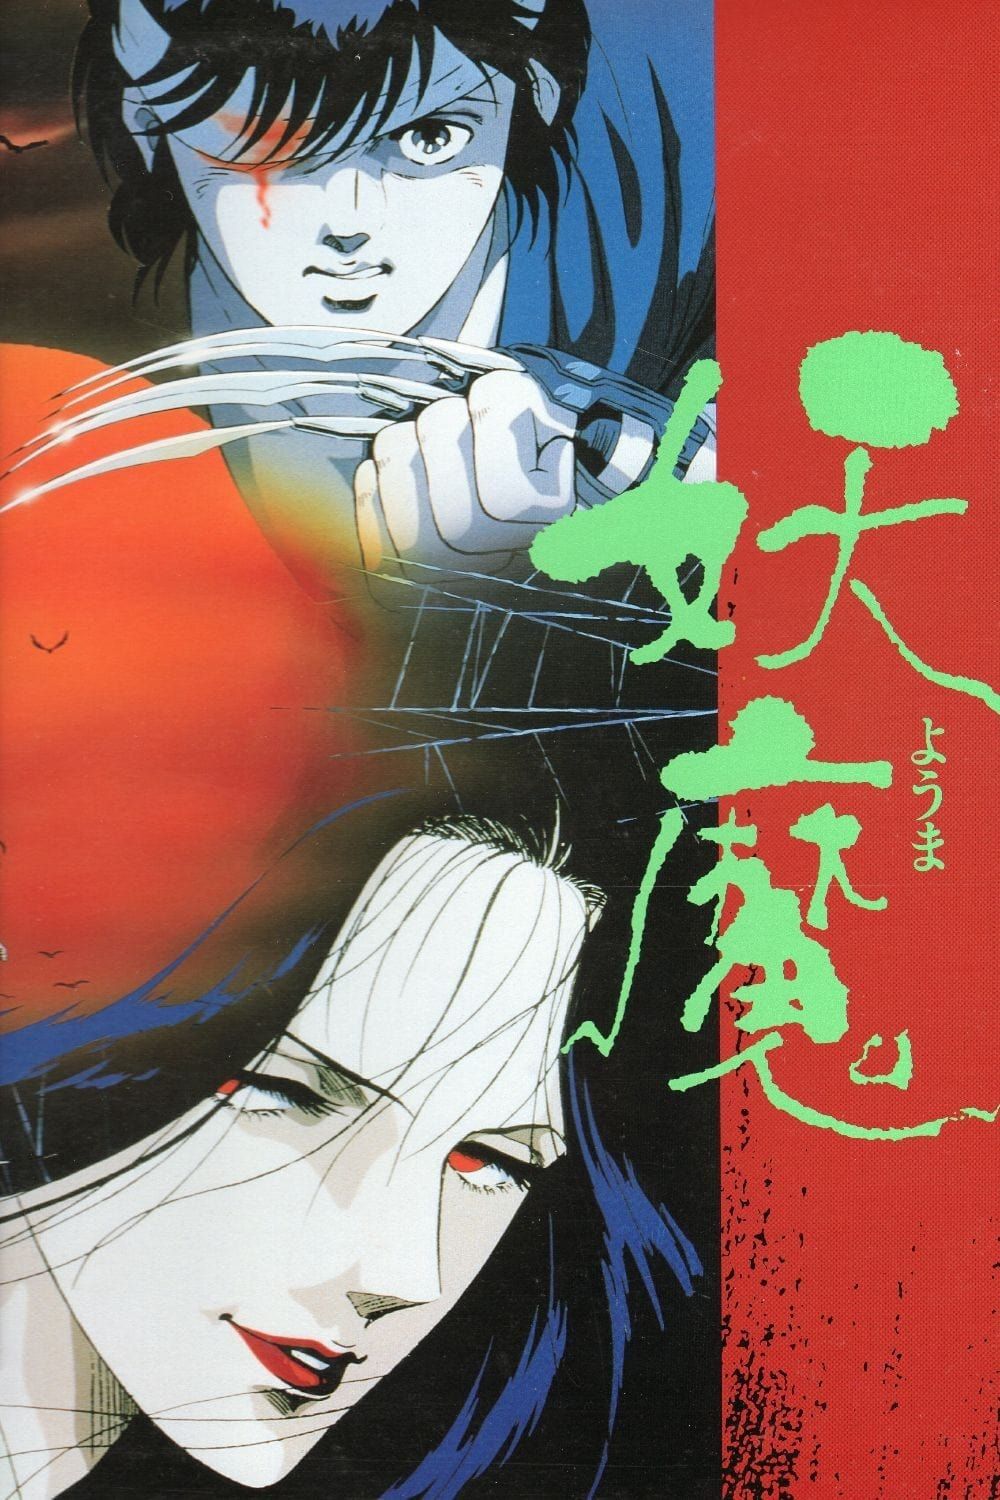 Blood Reign: Curse of the Yoma (OVA) (Sub) Latest Part